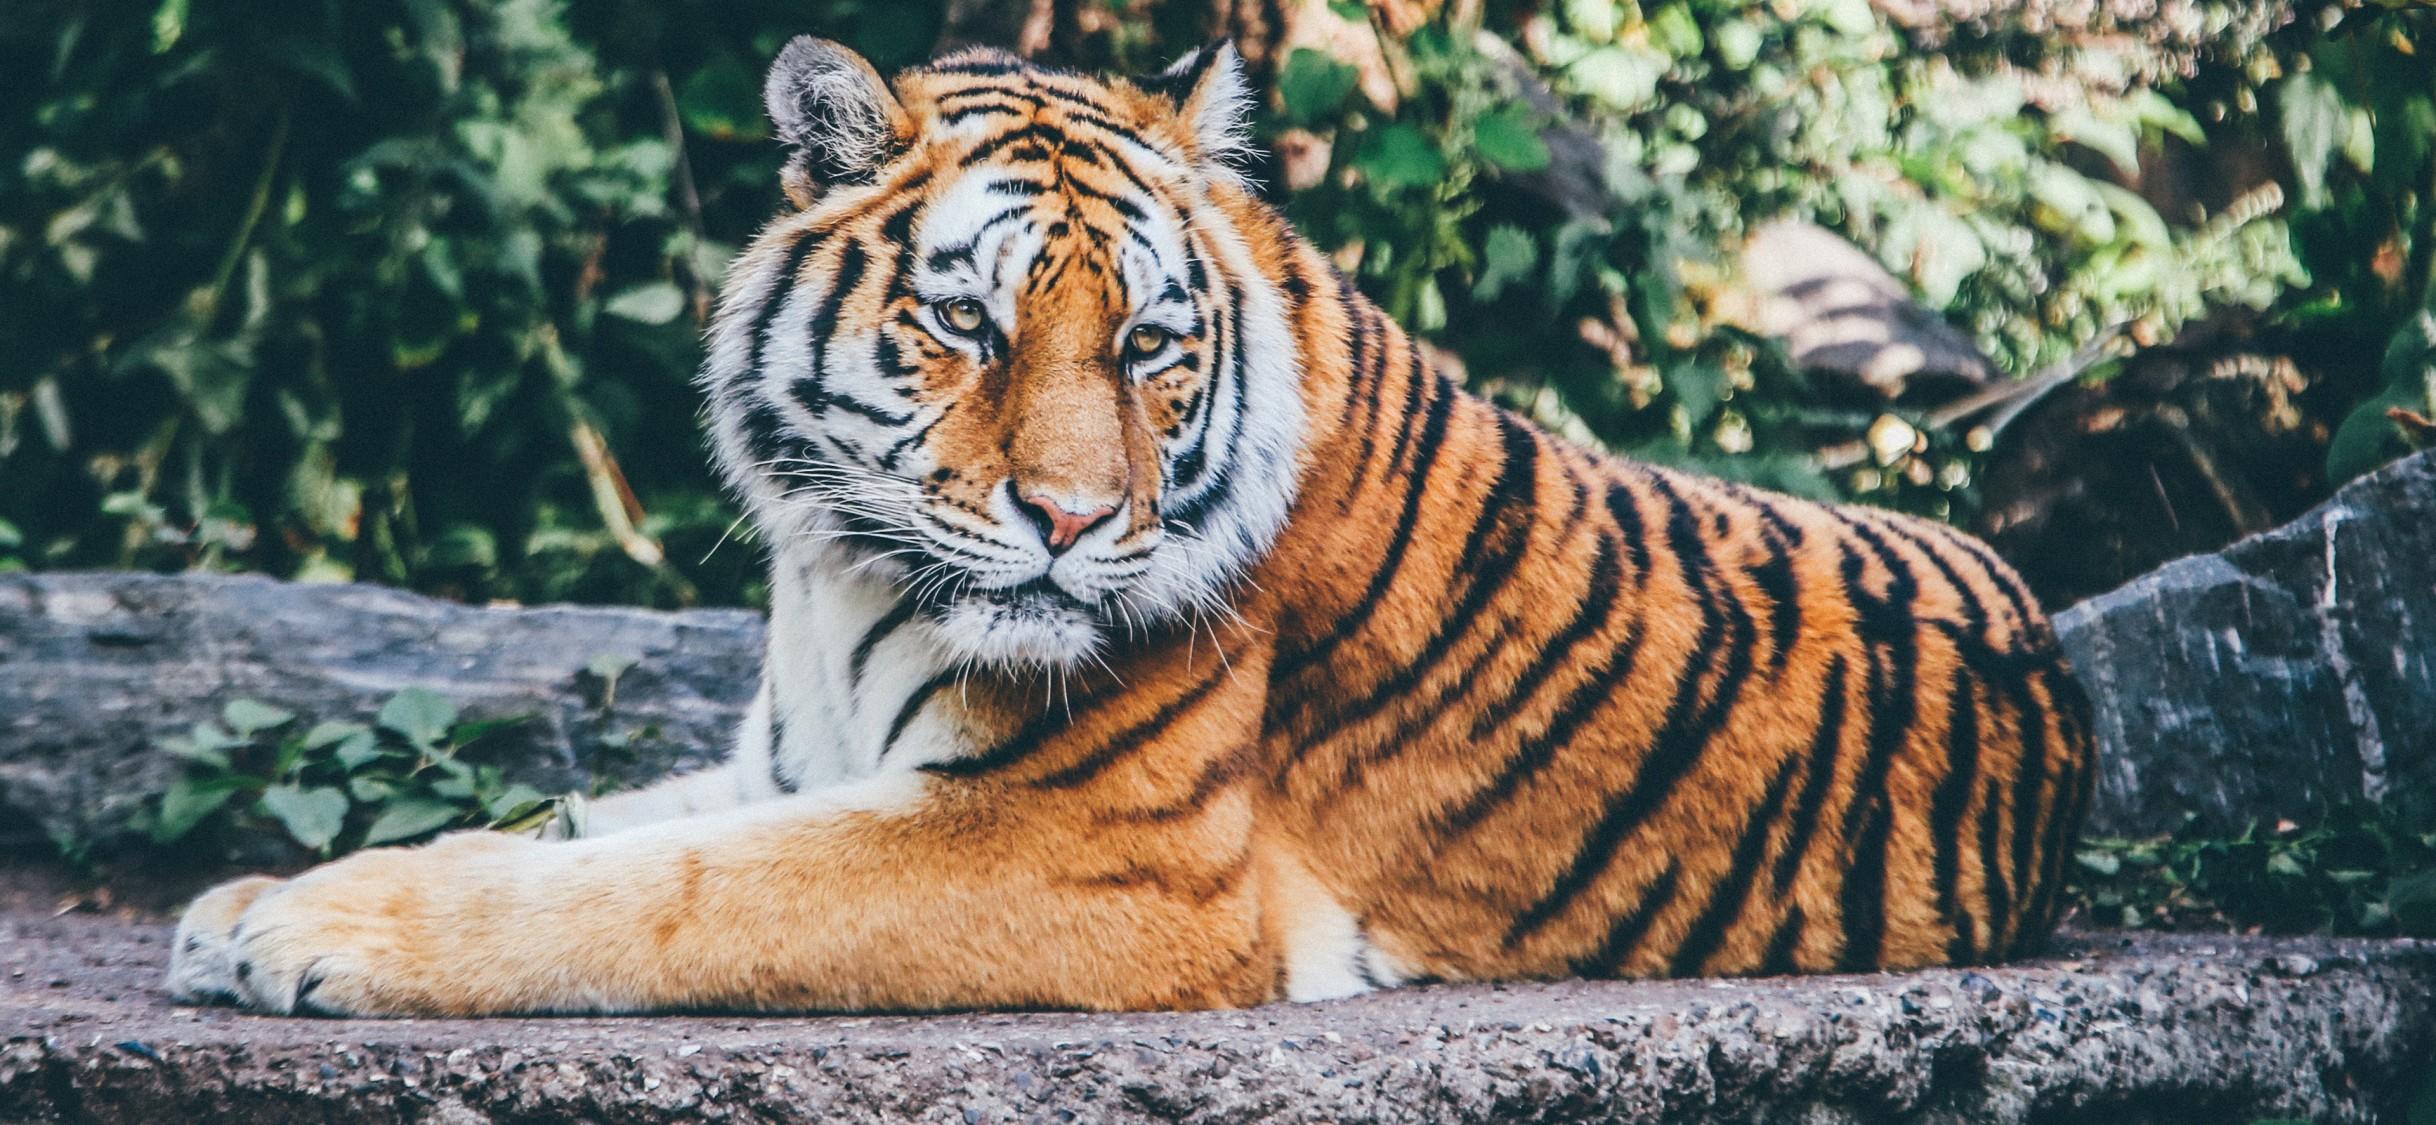 Download Beautiful Zoo Tiger Wallpaper in HD iPhone X